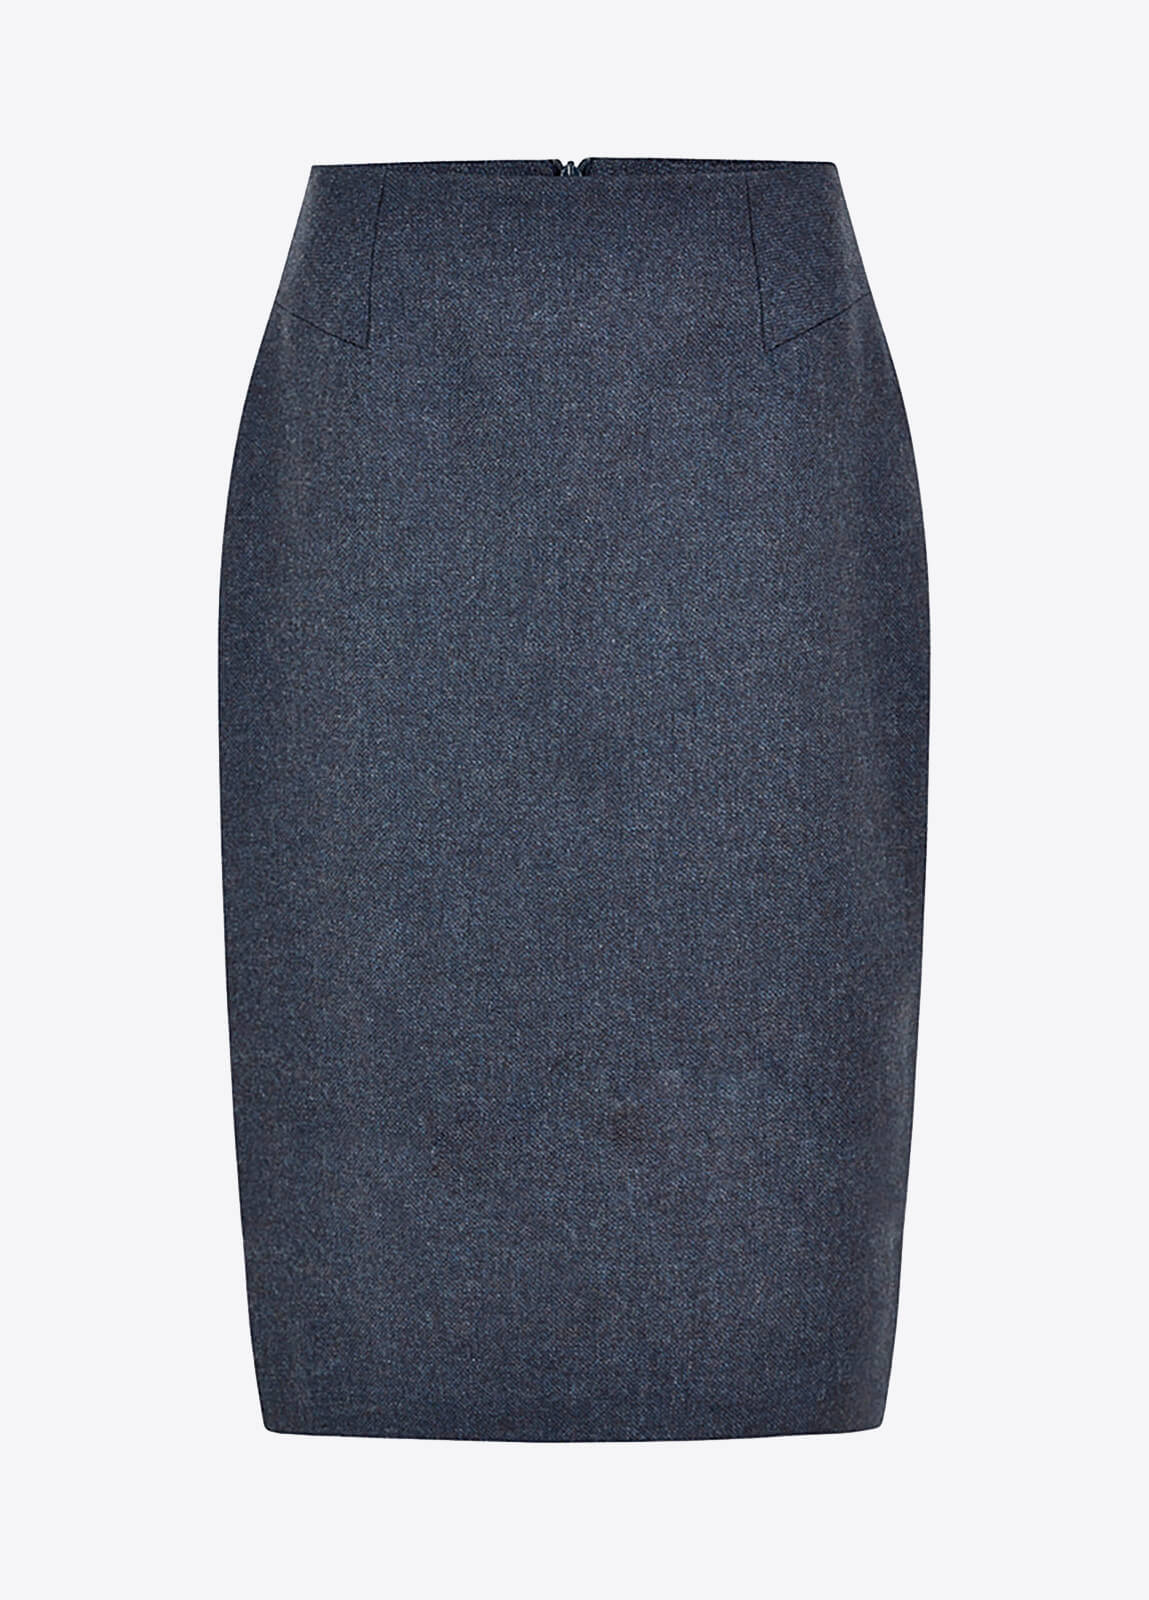 Fern Tweed Skirt - Denim